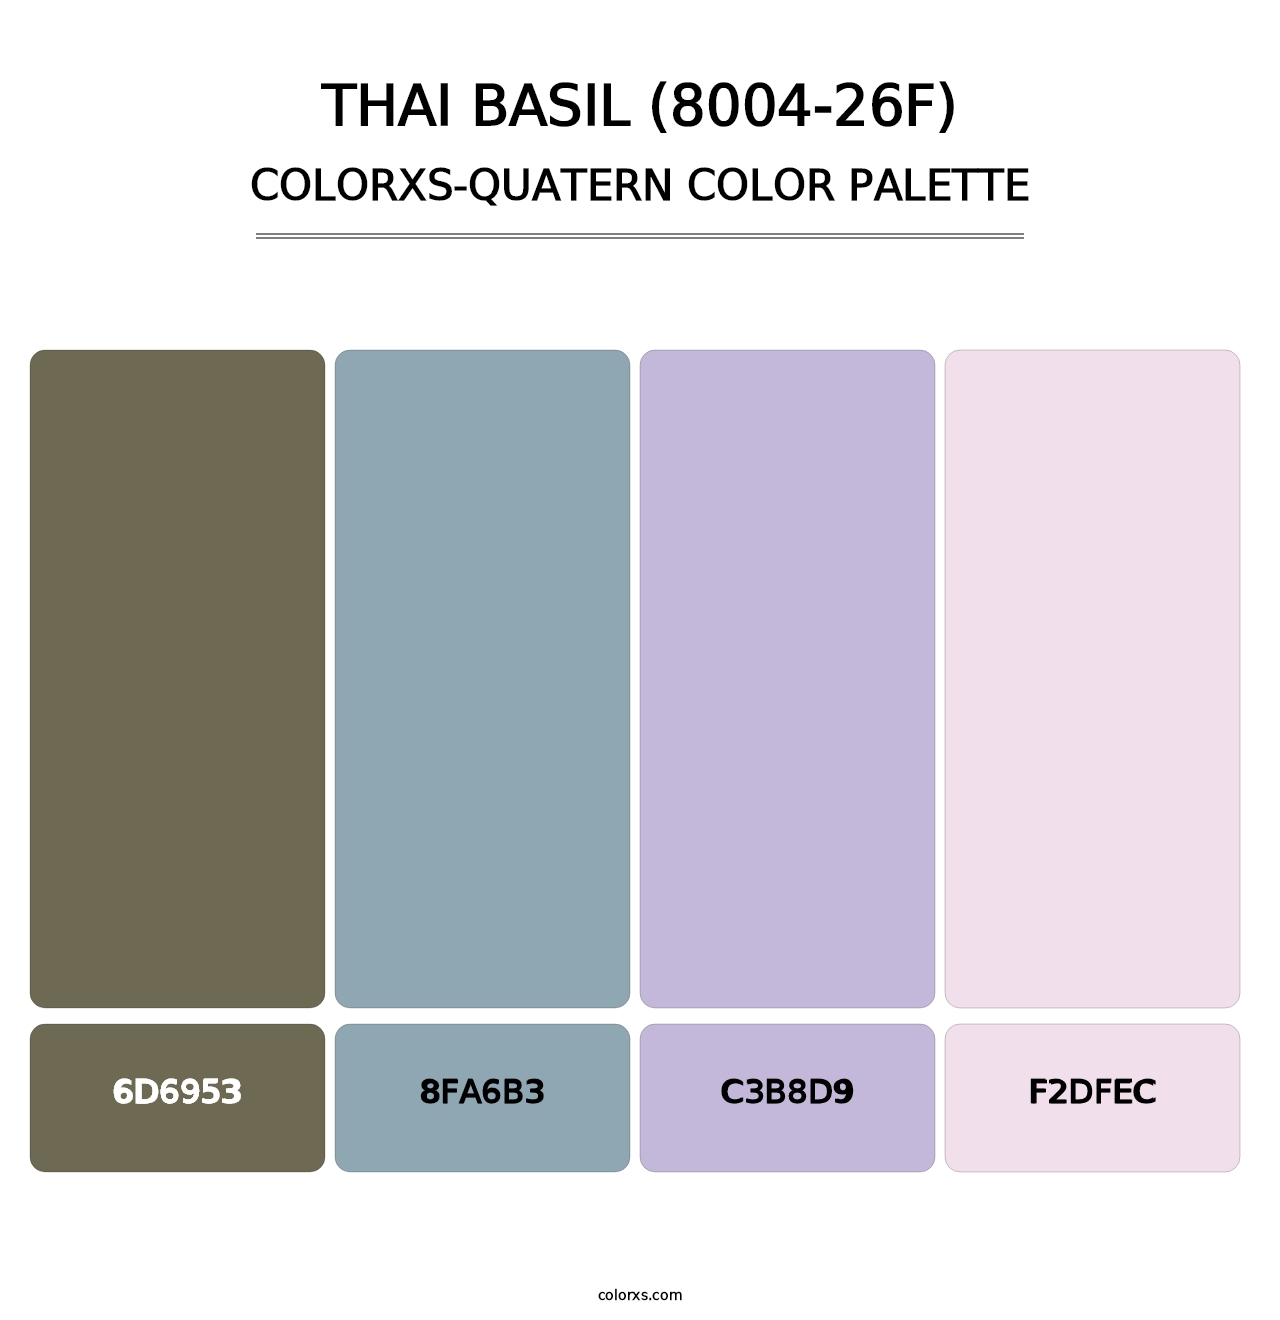 Thai Basil (8004-26F) - Colorxs Quatern Palette